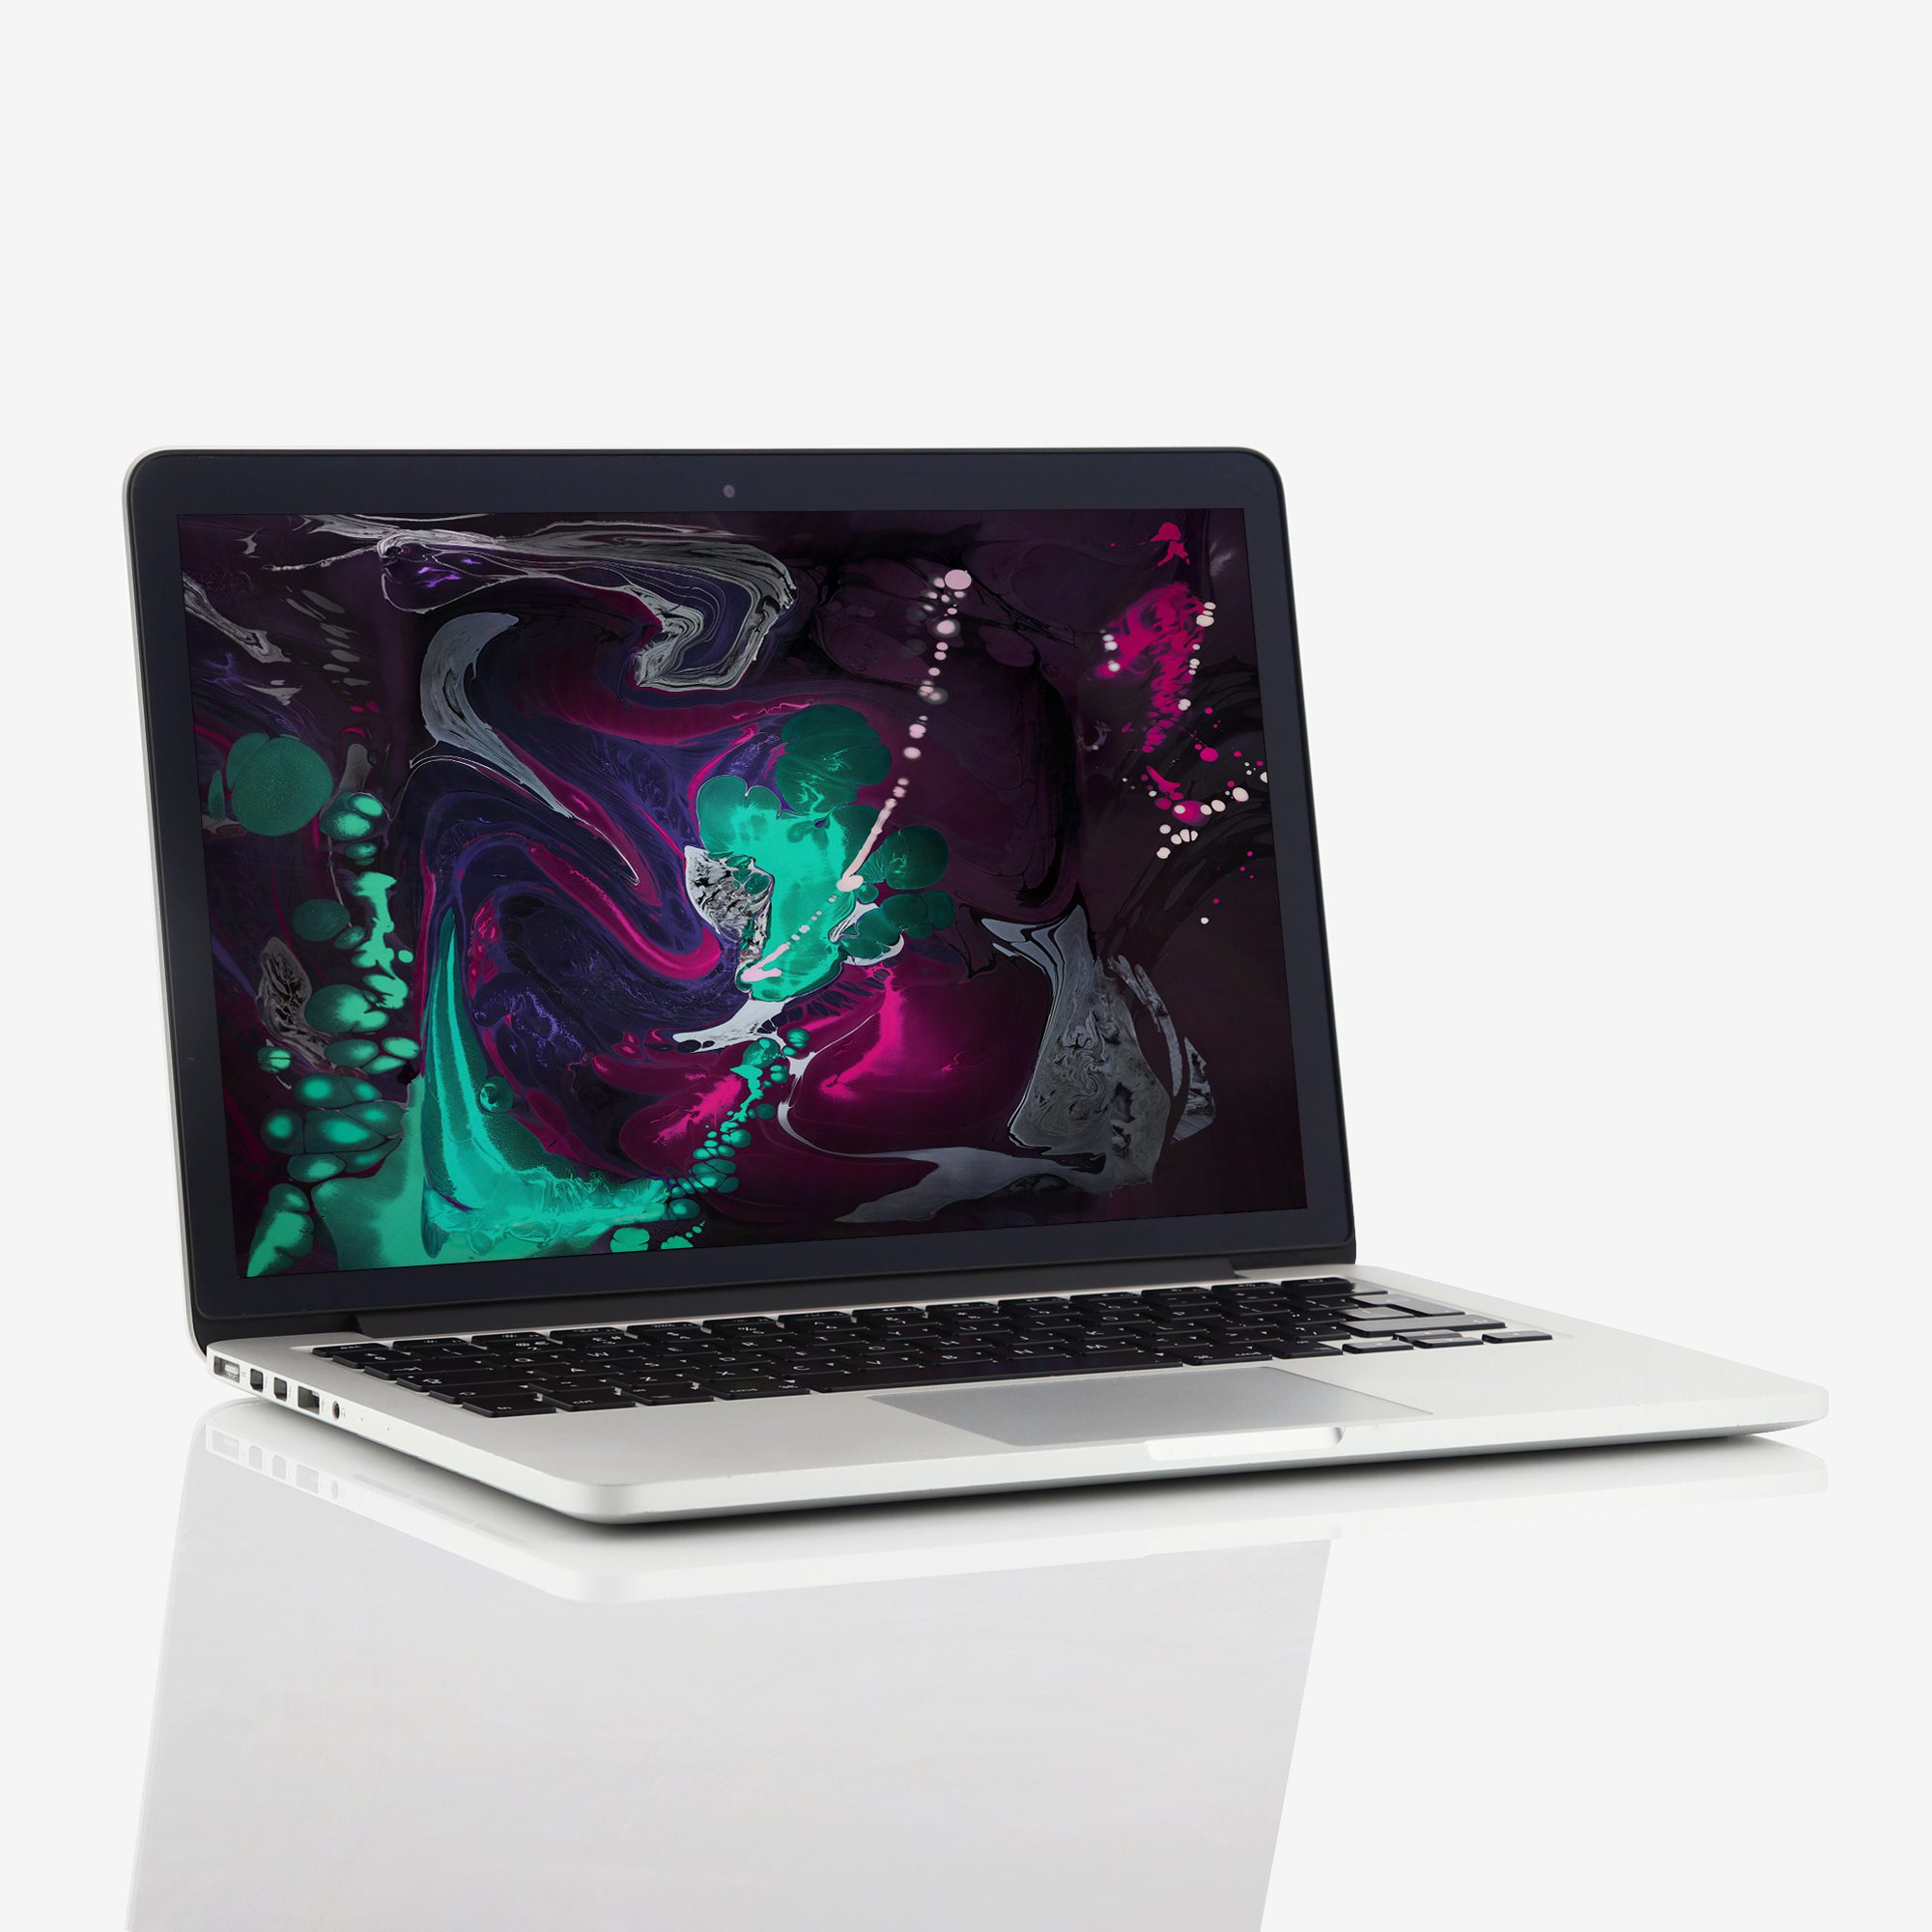 1 x Apple MacBook Pro Retina 13 Inch Intel Core i7 3.10 GHz (2015)